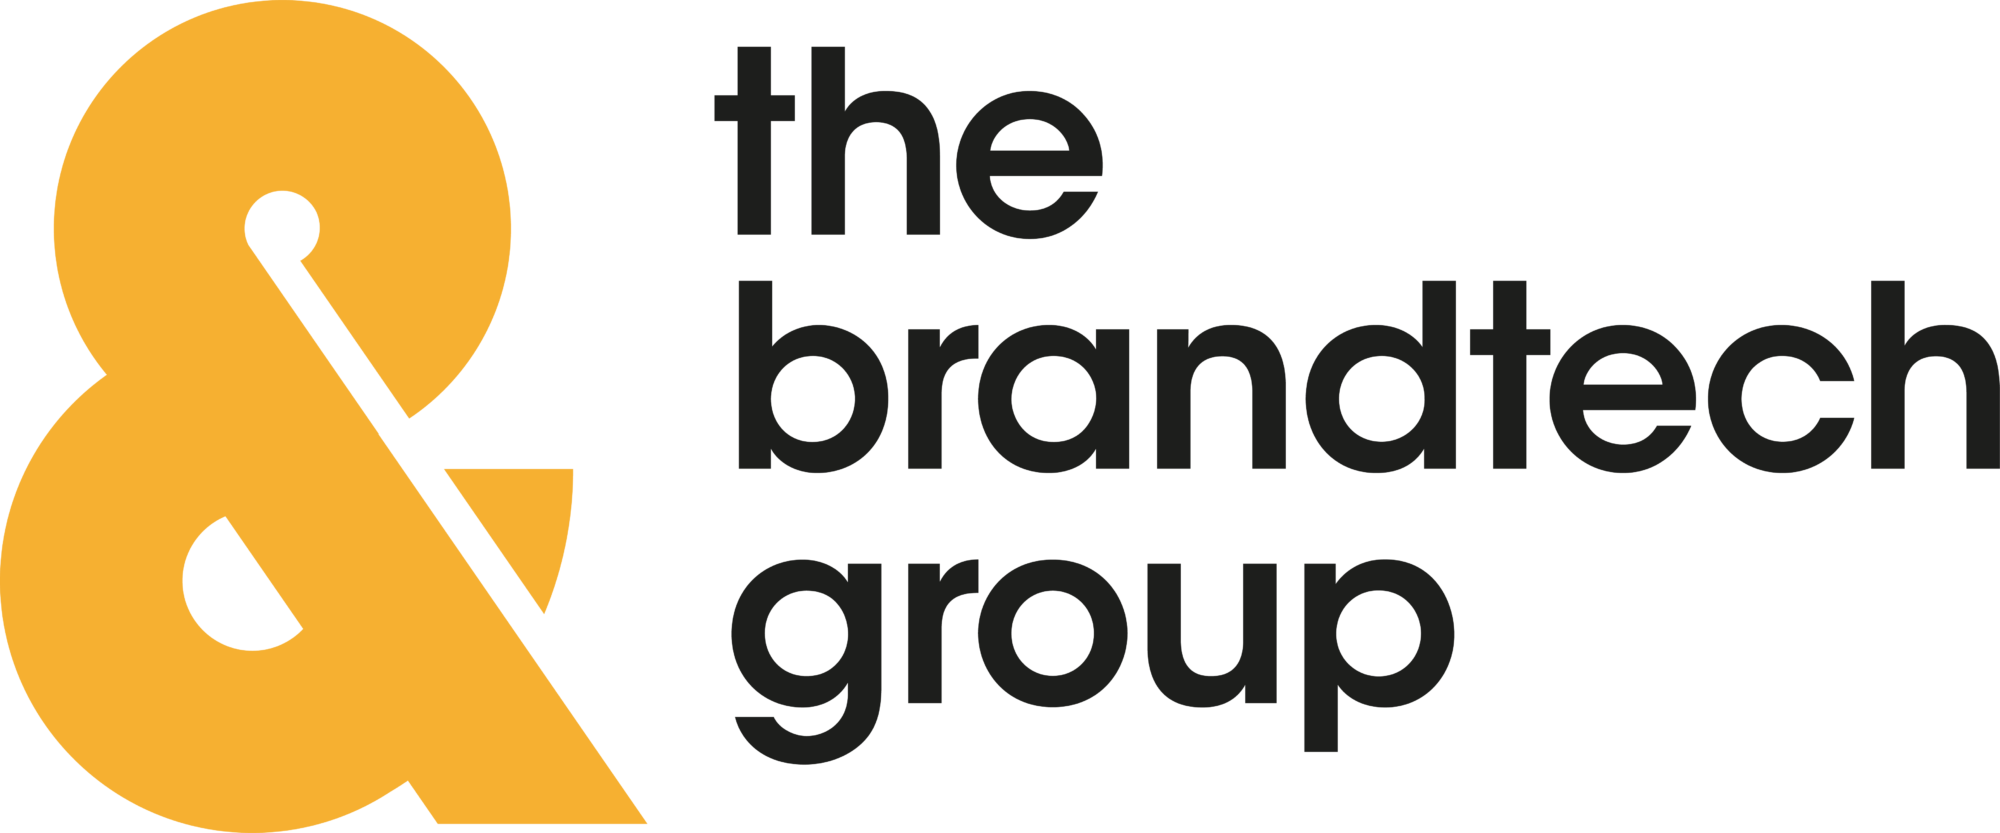 The Brandtech Group